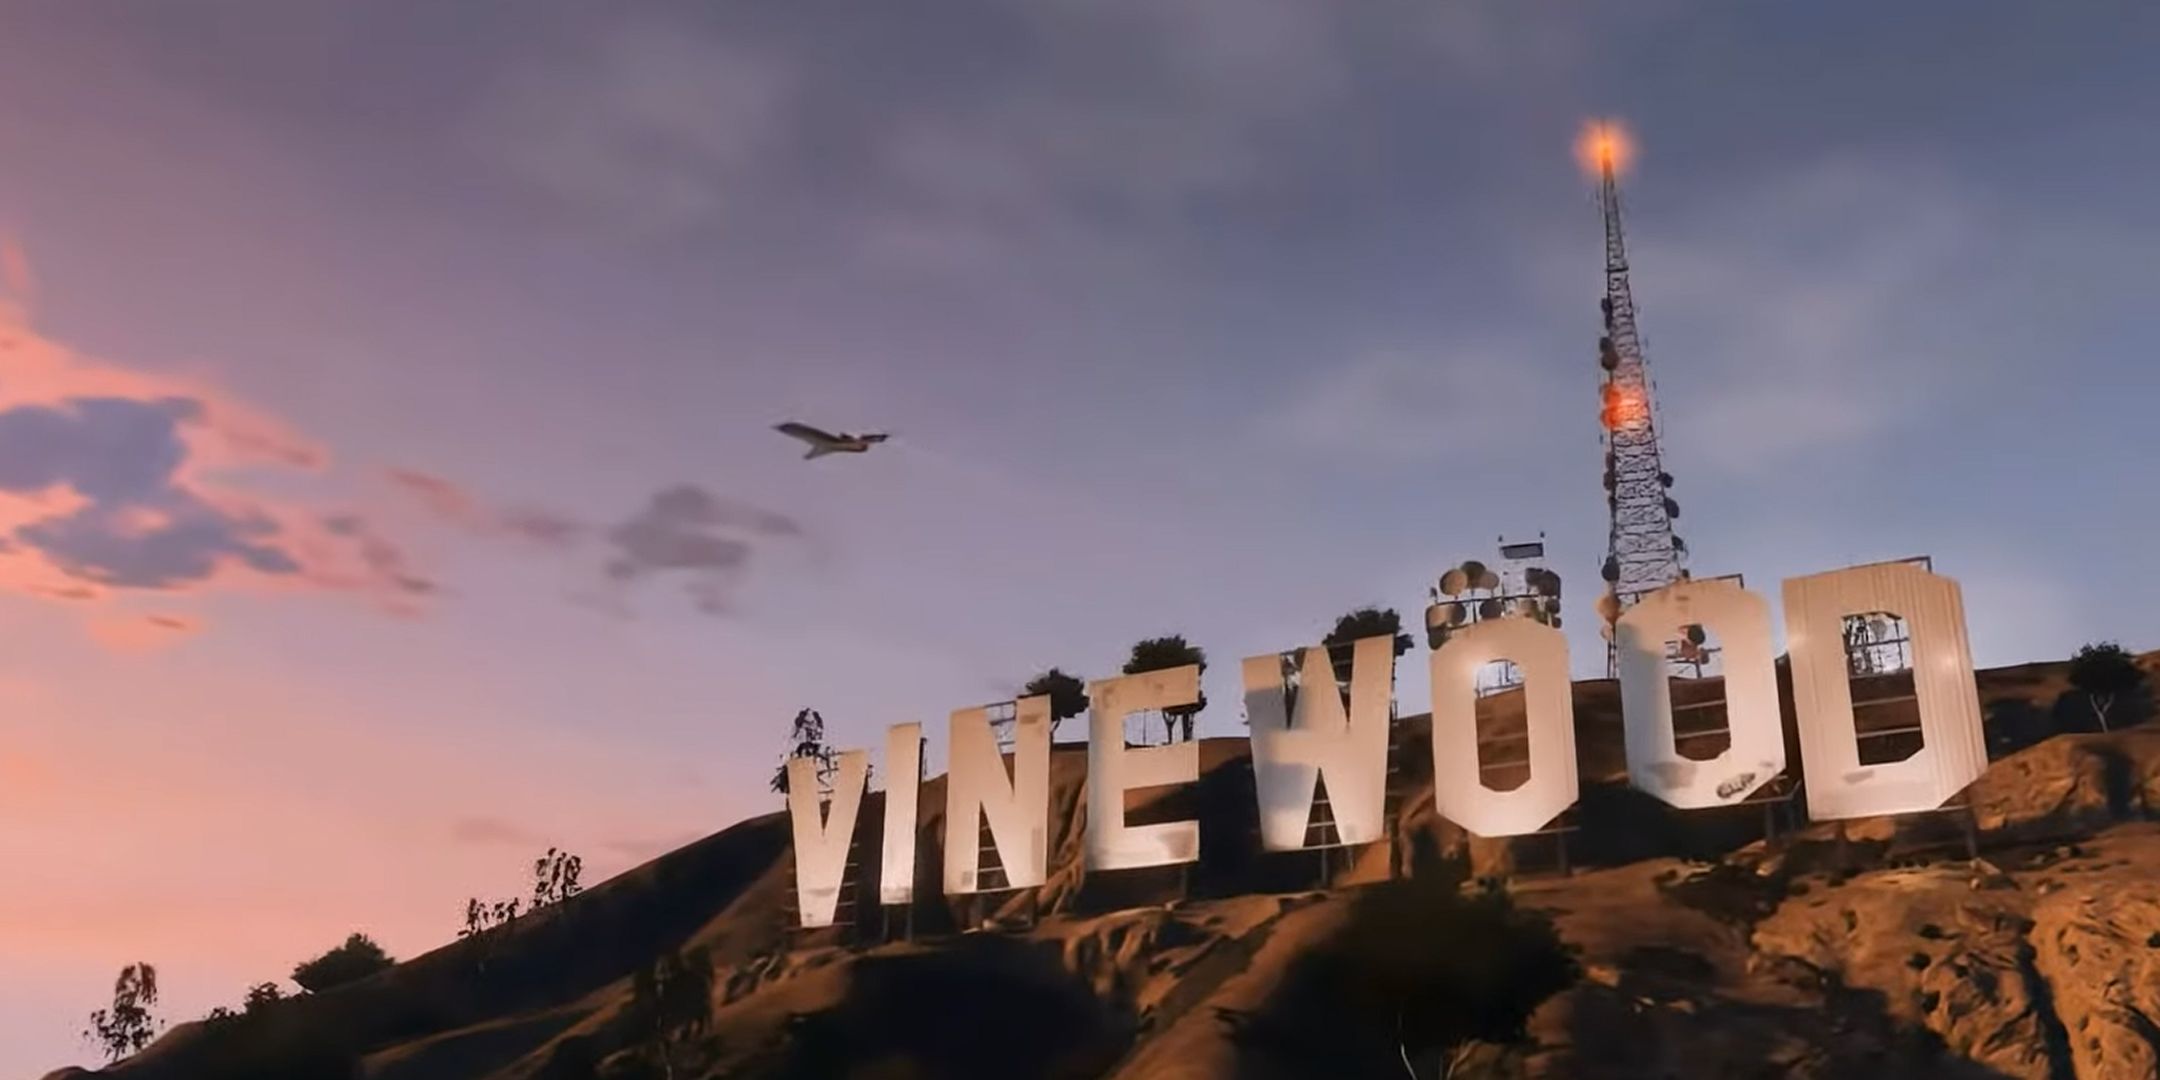 Grand Theft Auto V vinewood hollywood sign